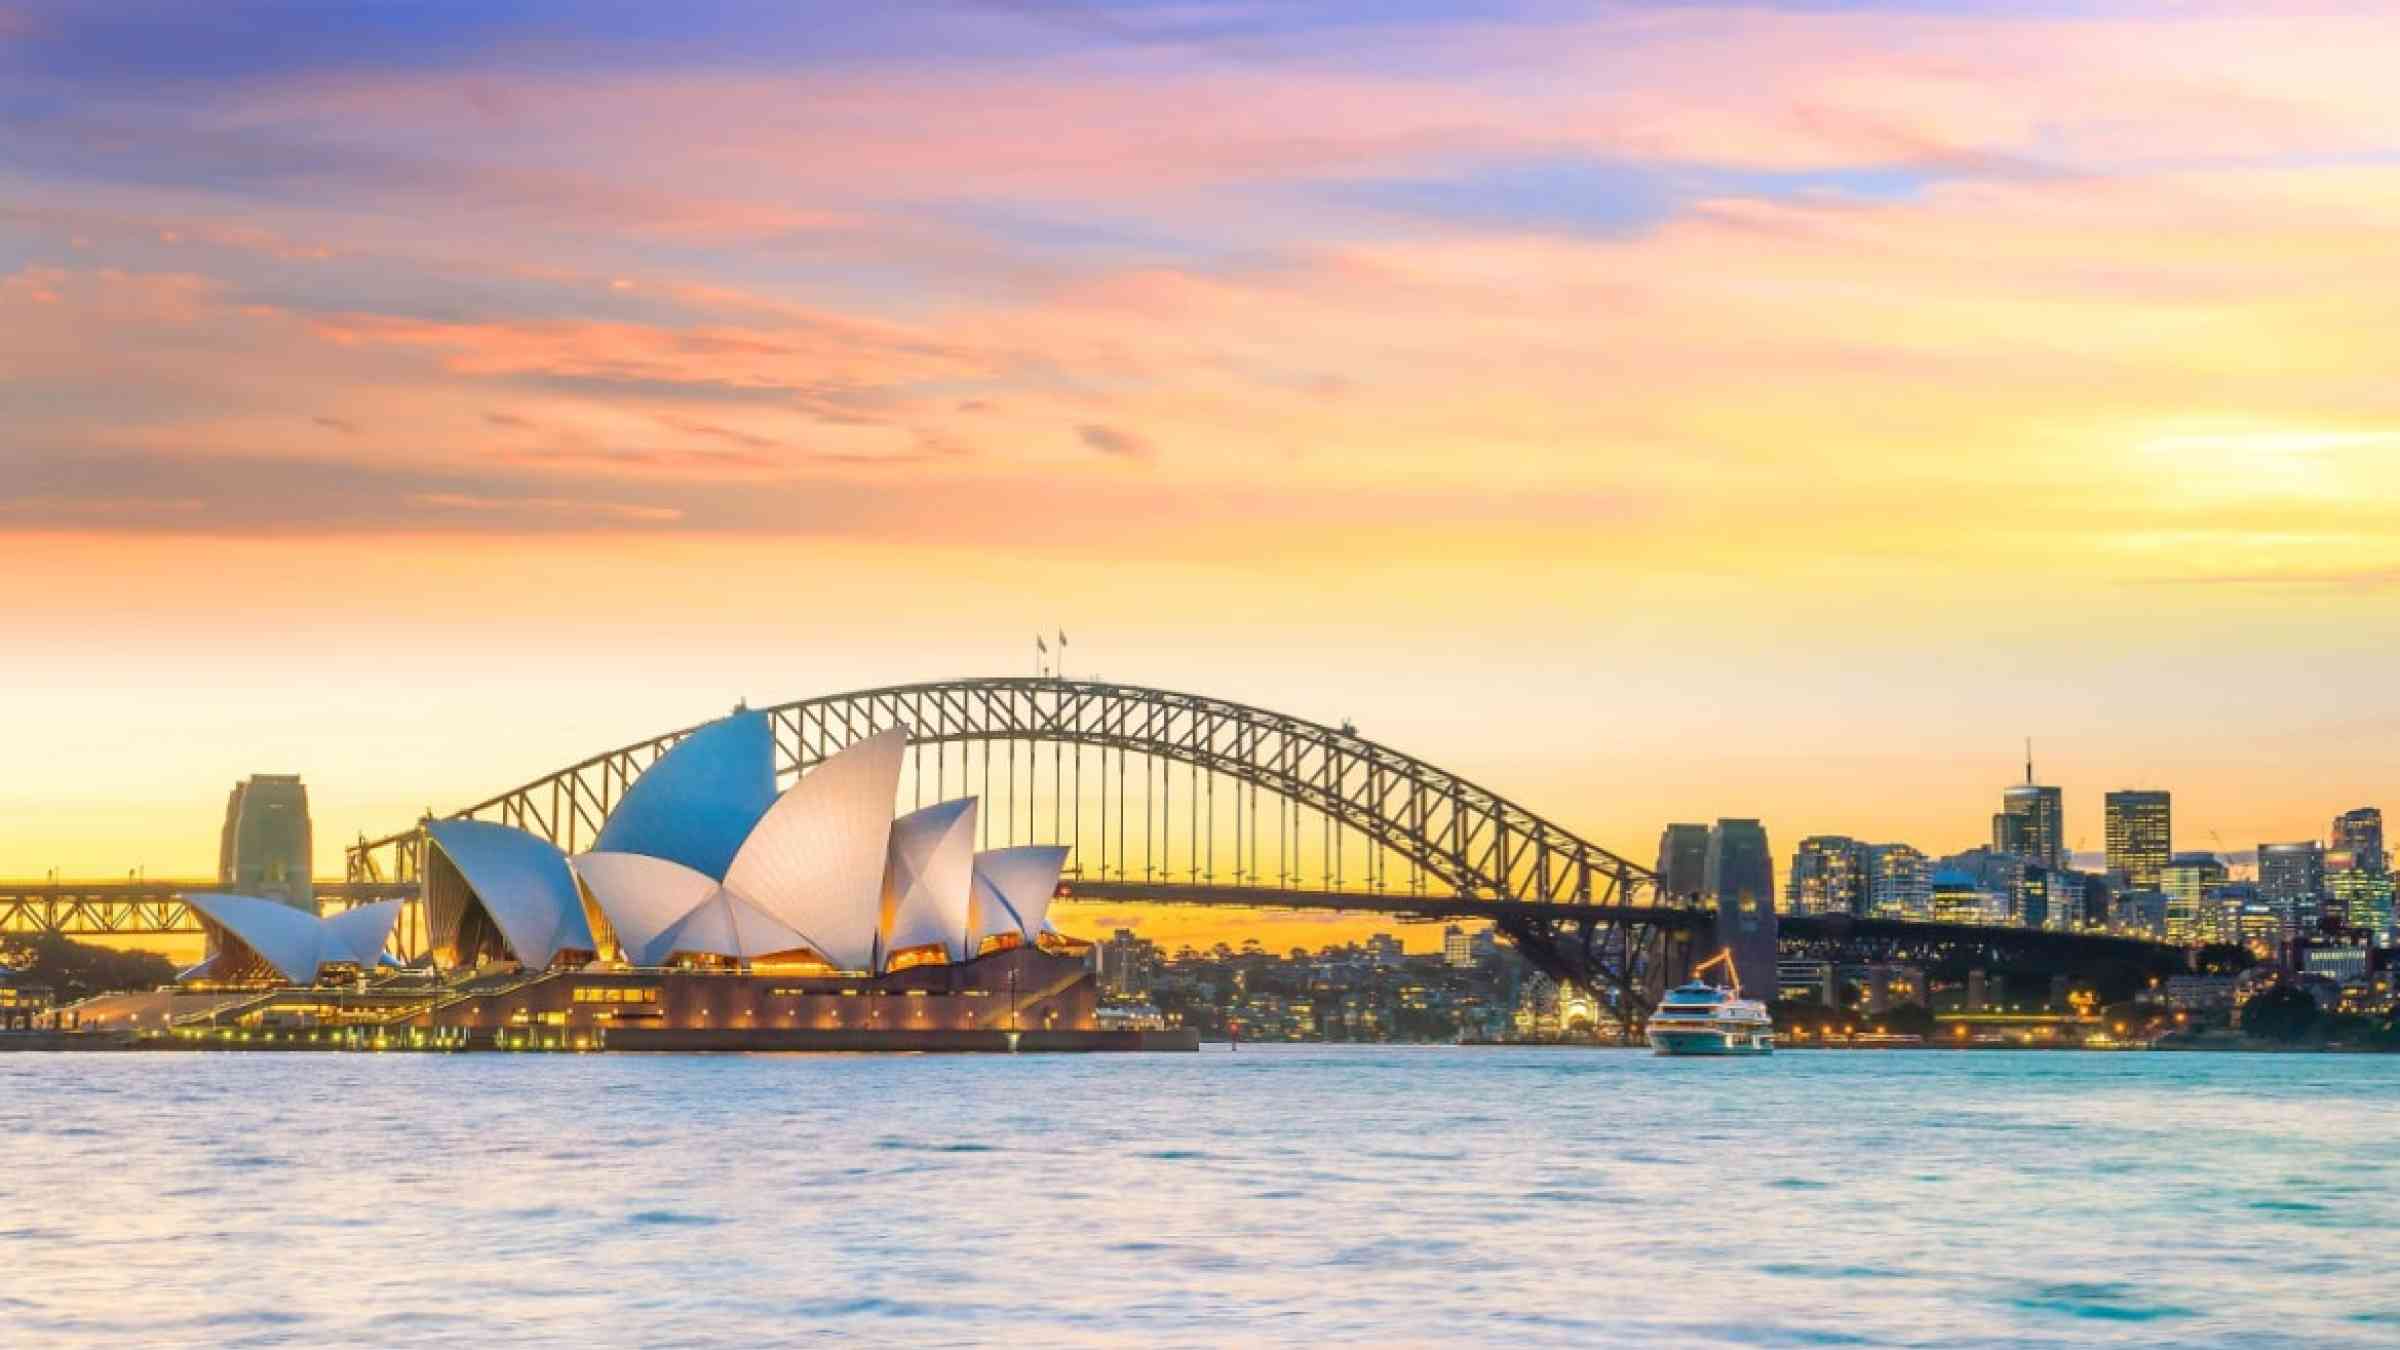 Skyline of Sydney in Australia